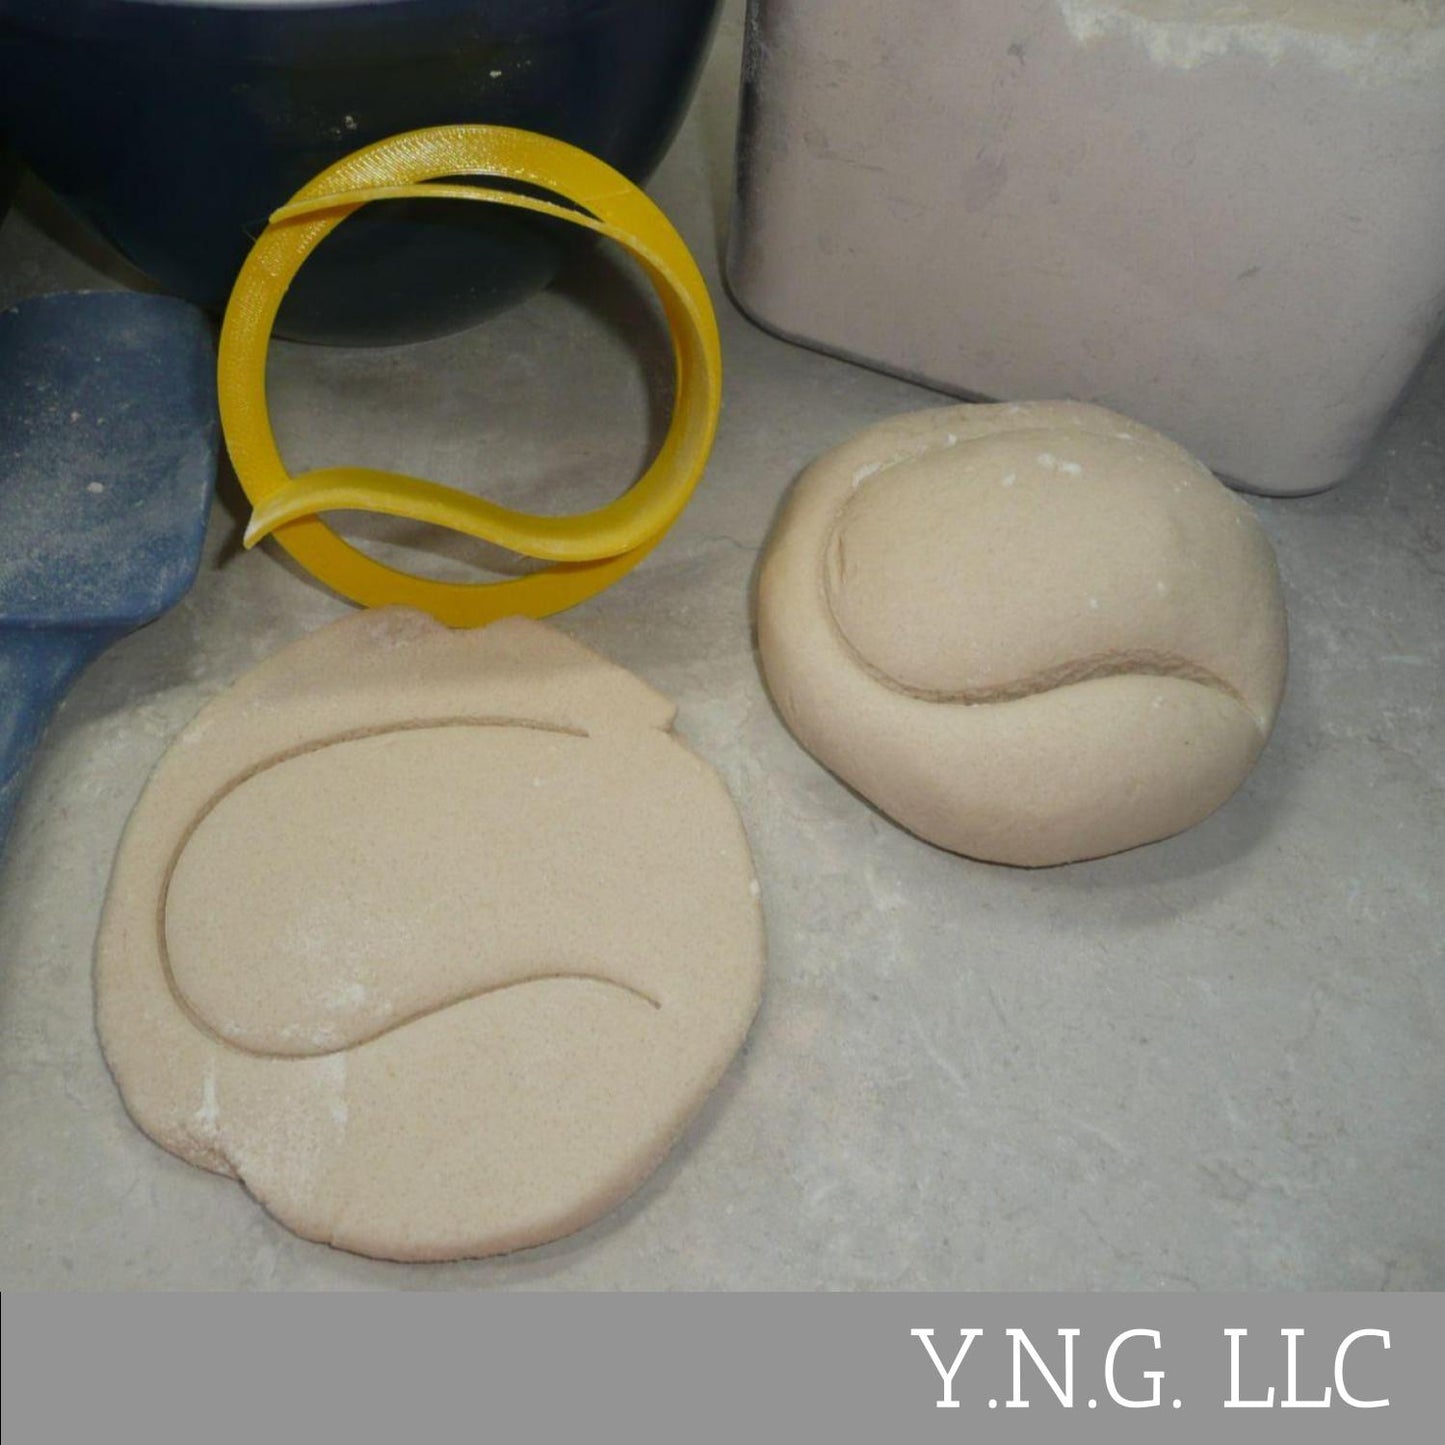 Tennis Ball Design Concha Cutter Mexican Sweet Bread Stamp USA Made PR4620